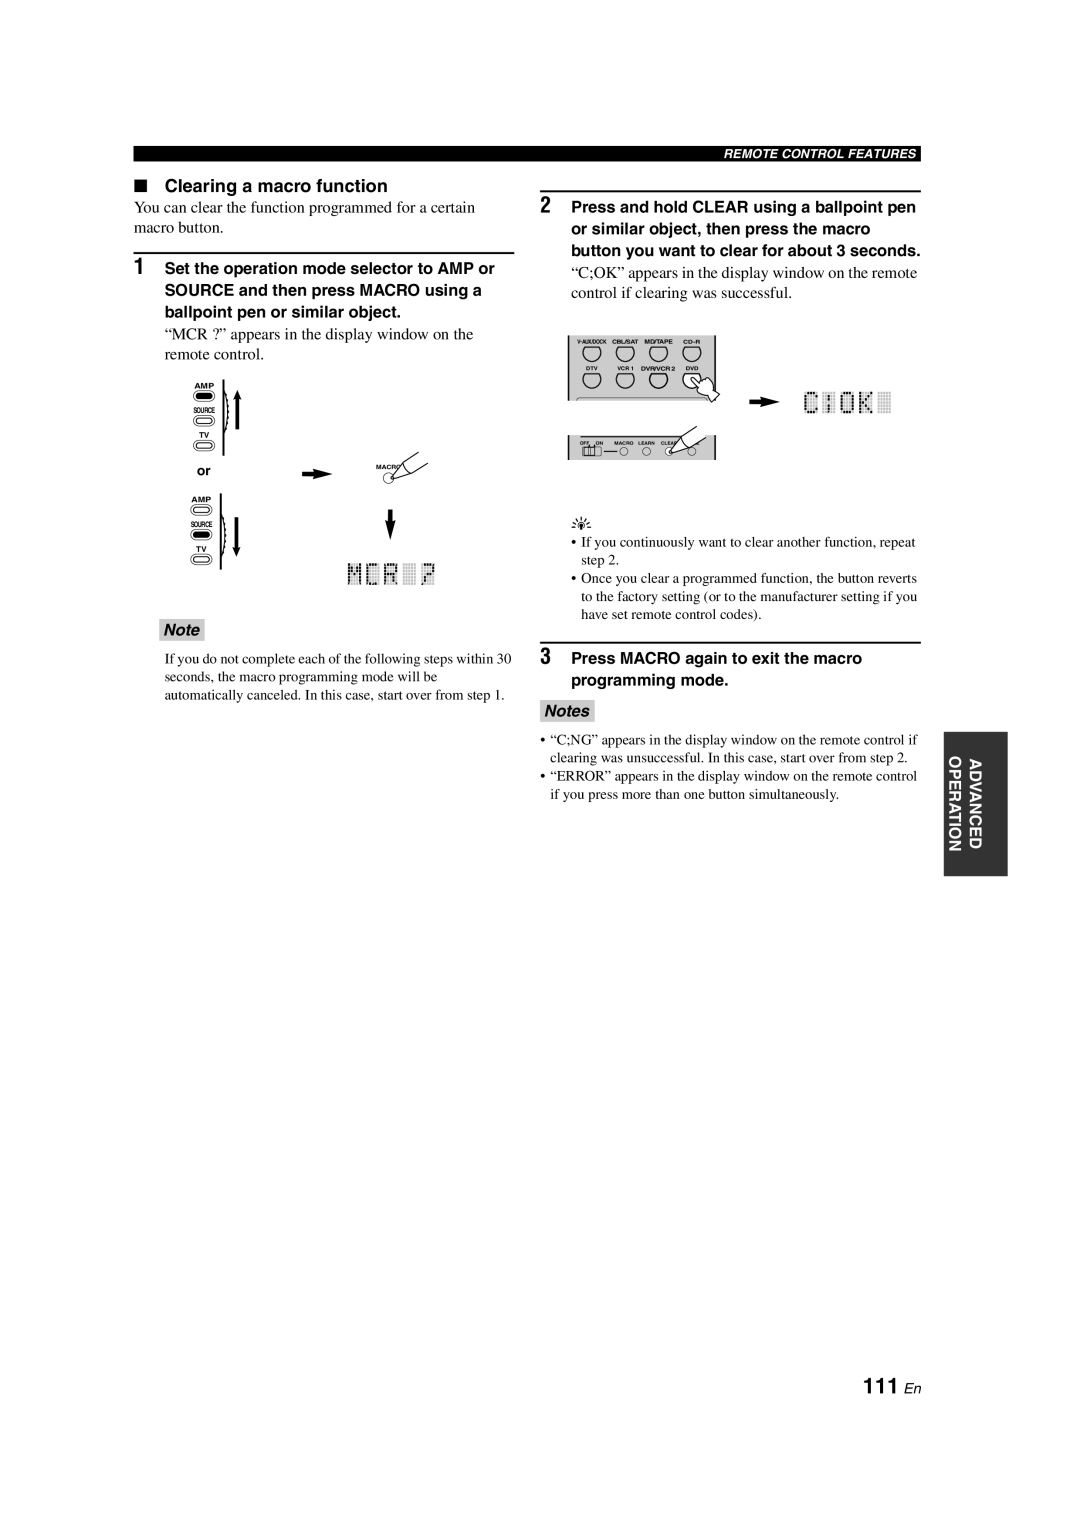 Yamaha HTR-6090 owner manual 111 En, Clearing a macro function, Notes 